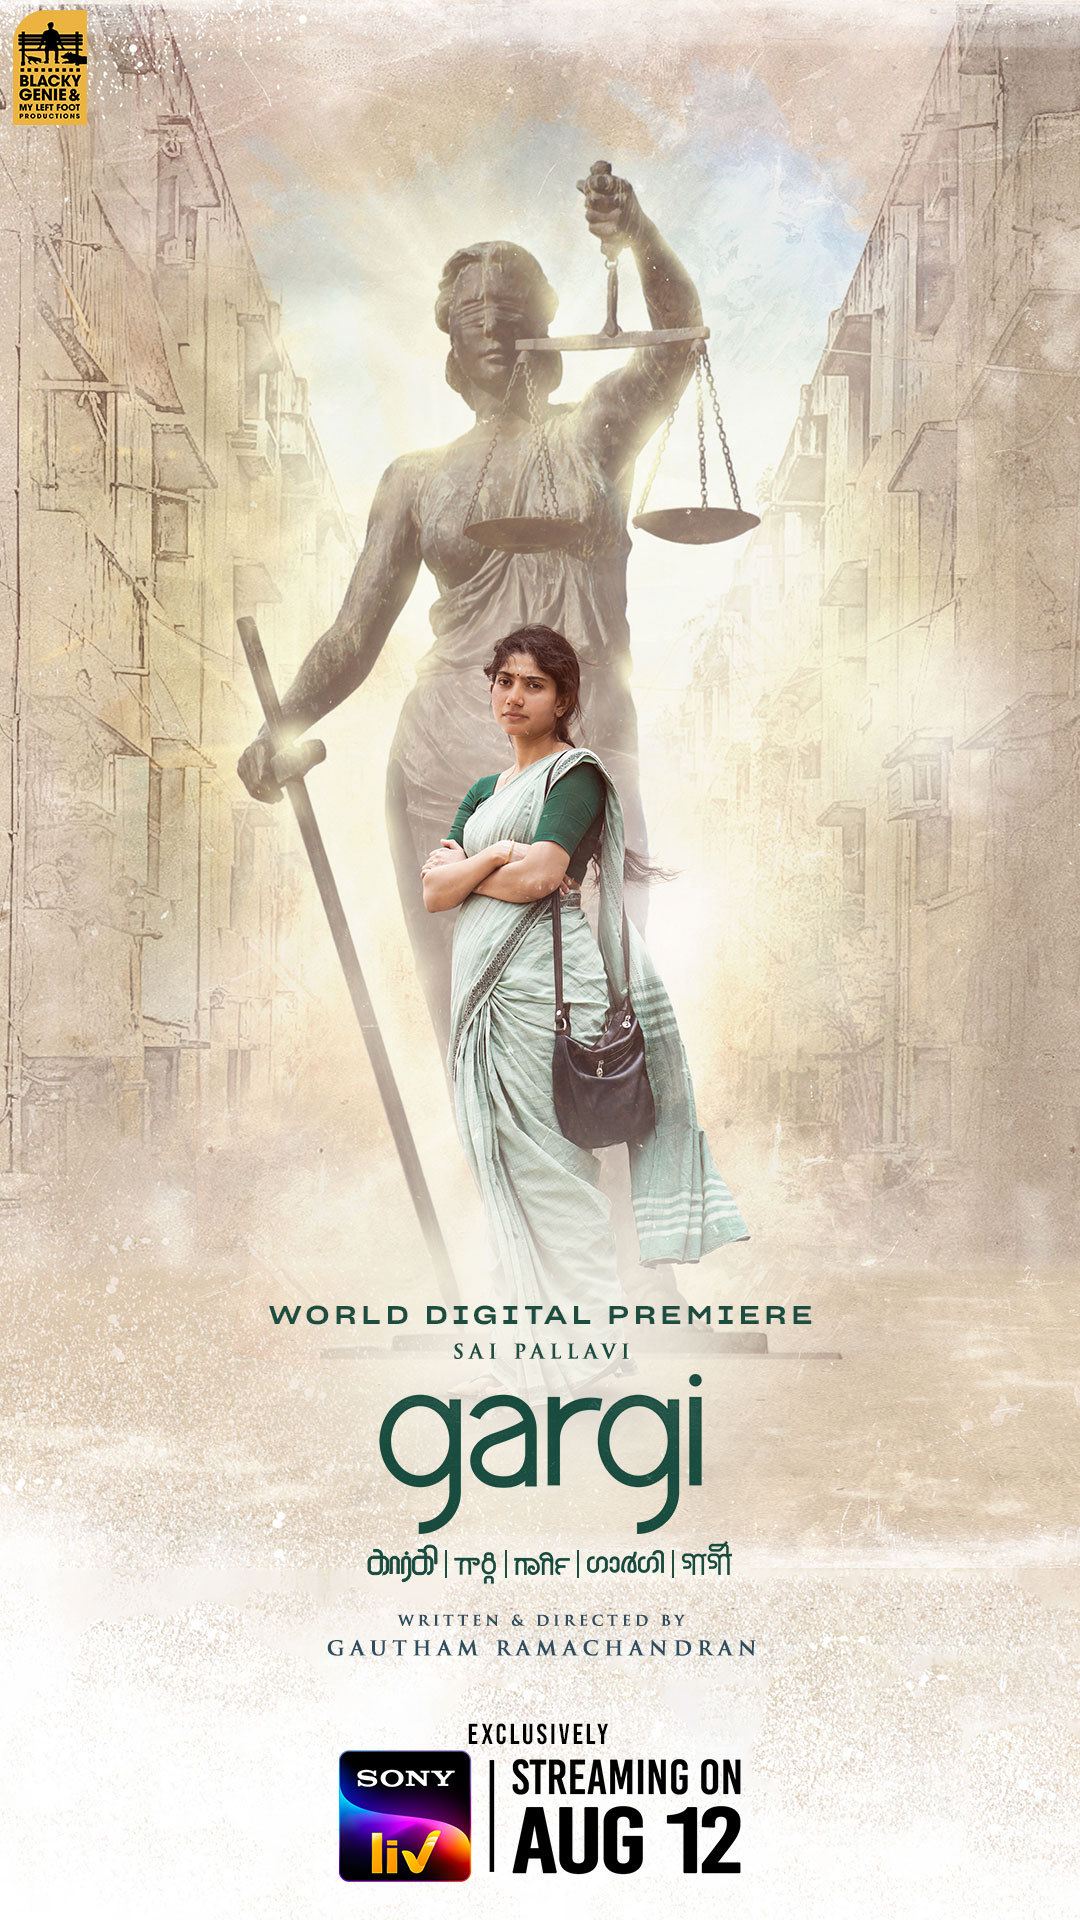 Sai Pallavi Gargi Movie Releasing in Bengali Language